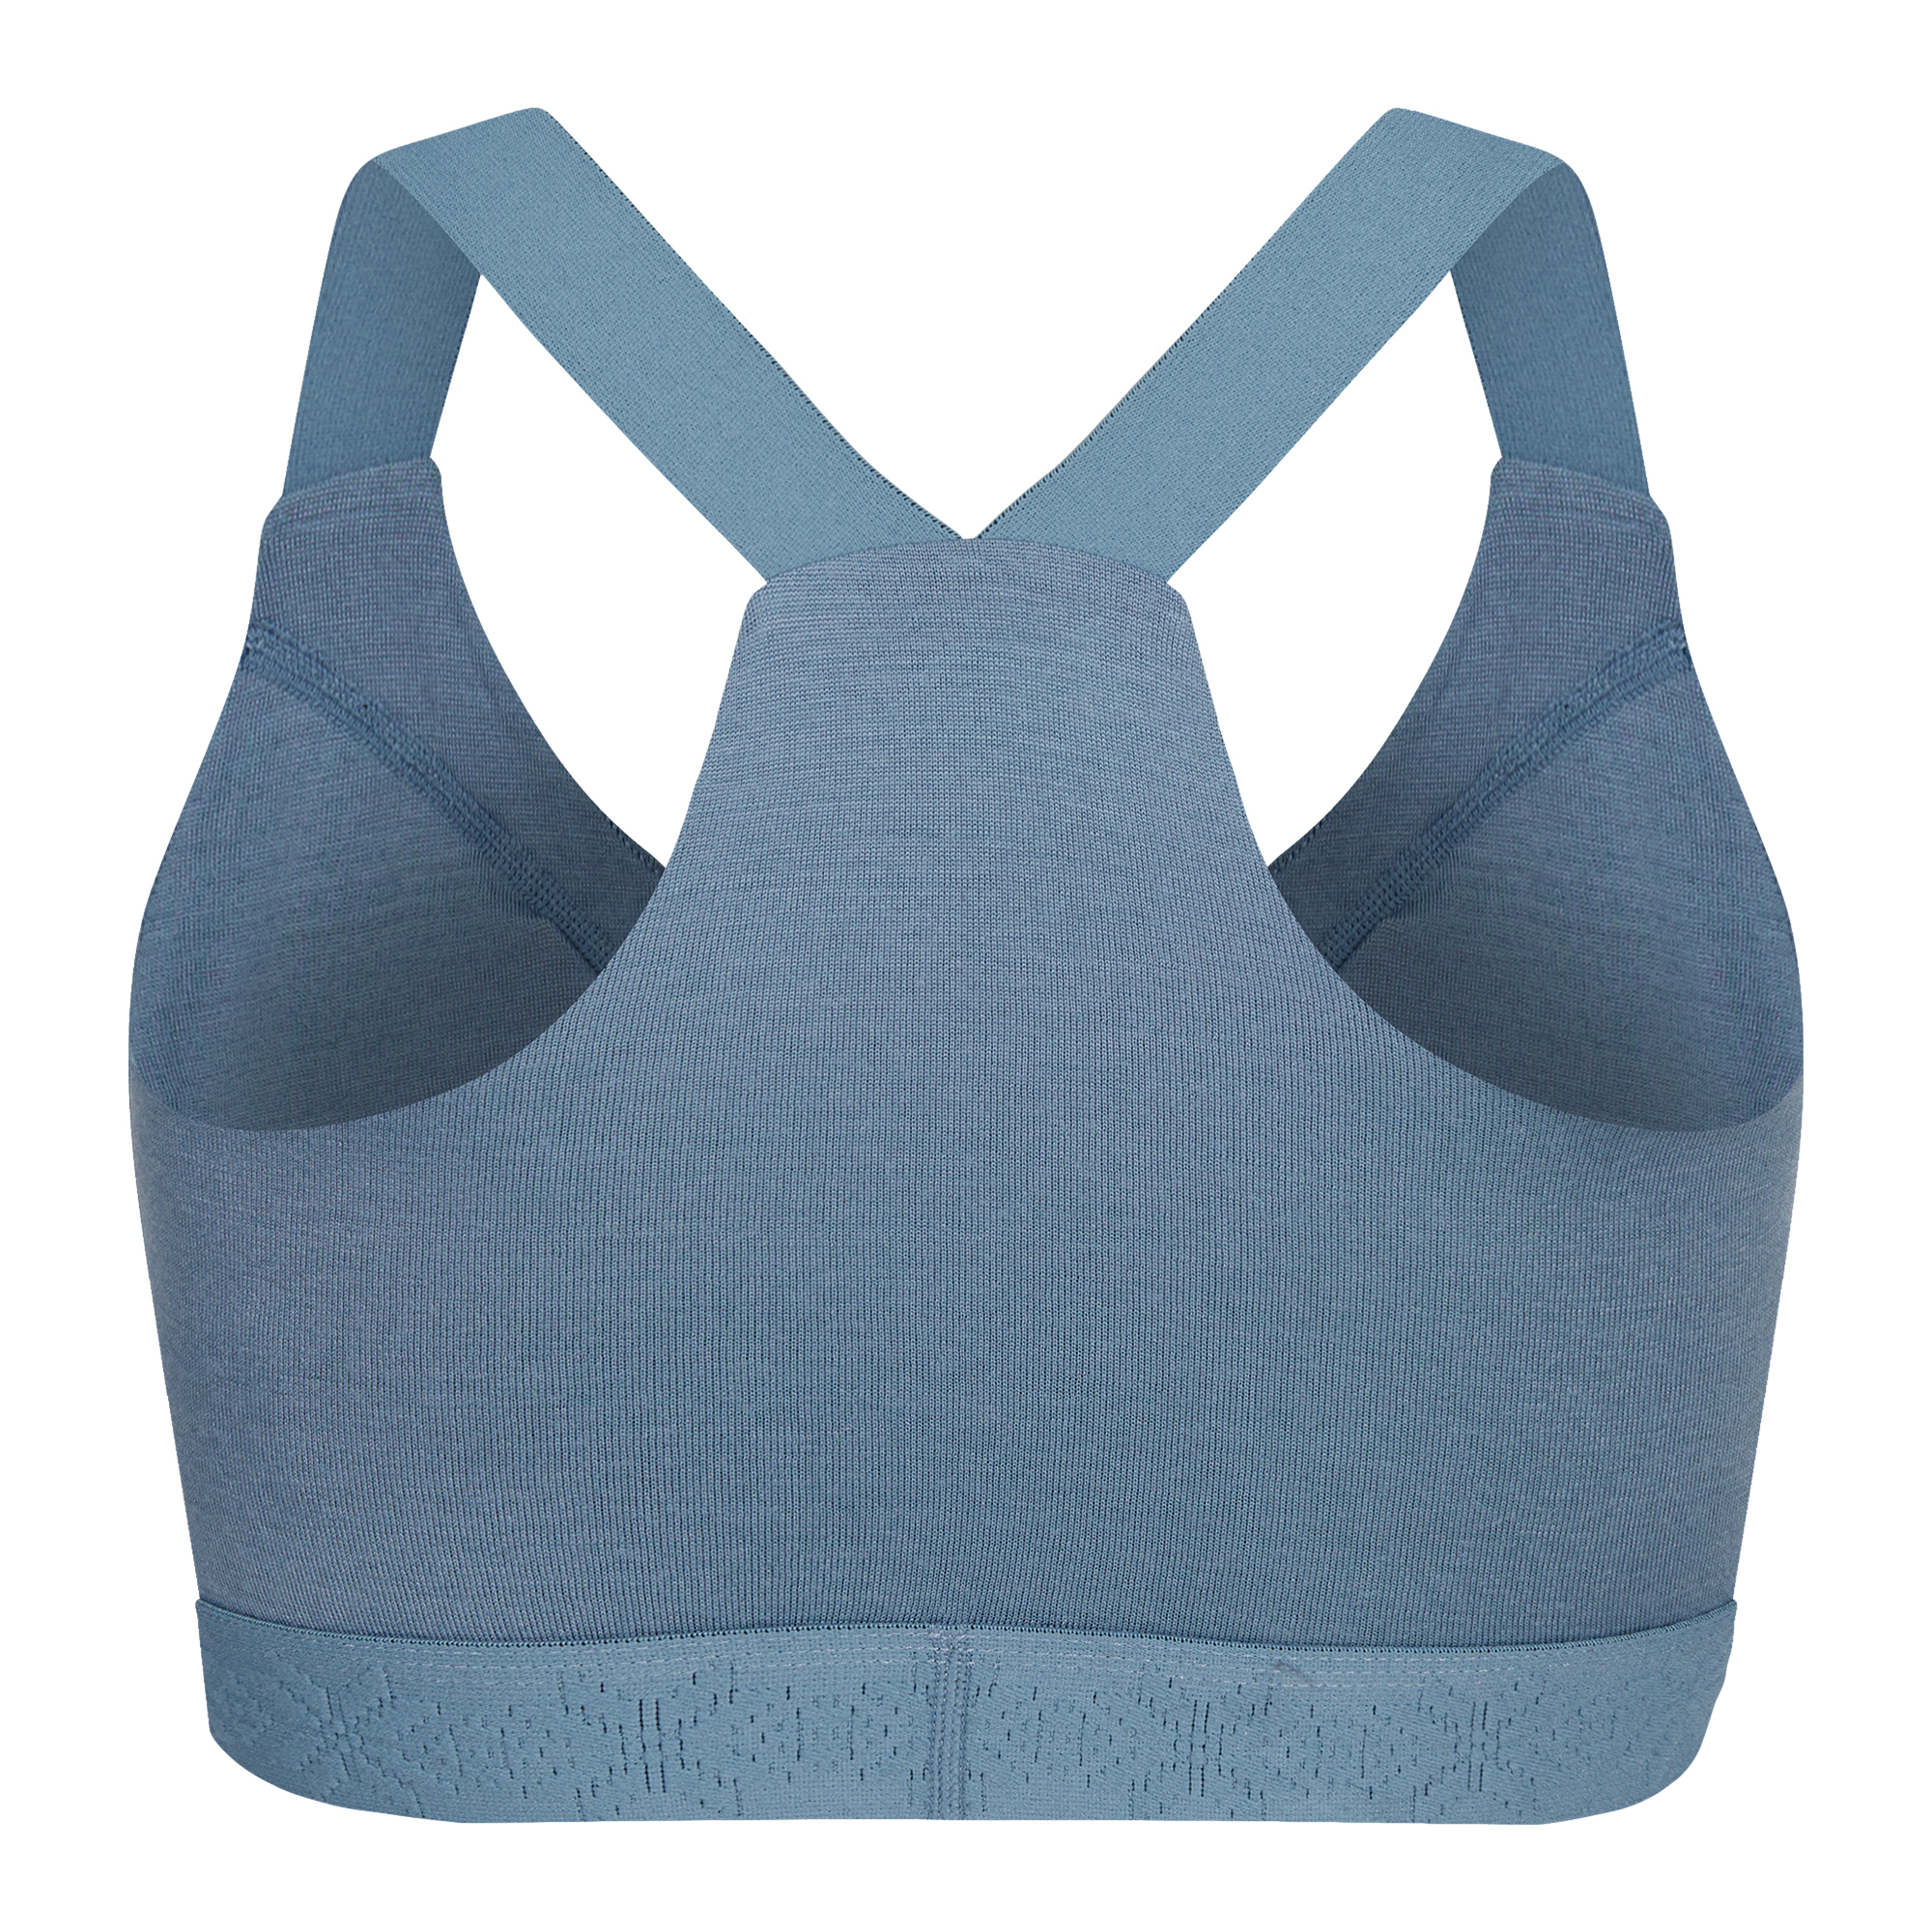 OLYMPIC - blue merino jersey 140 gr sports bra for woman, Rewoolution